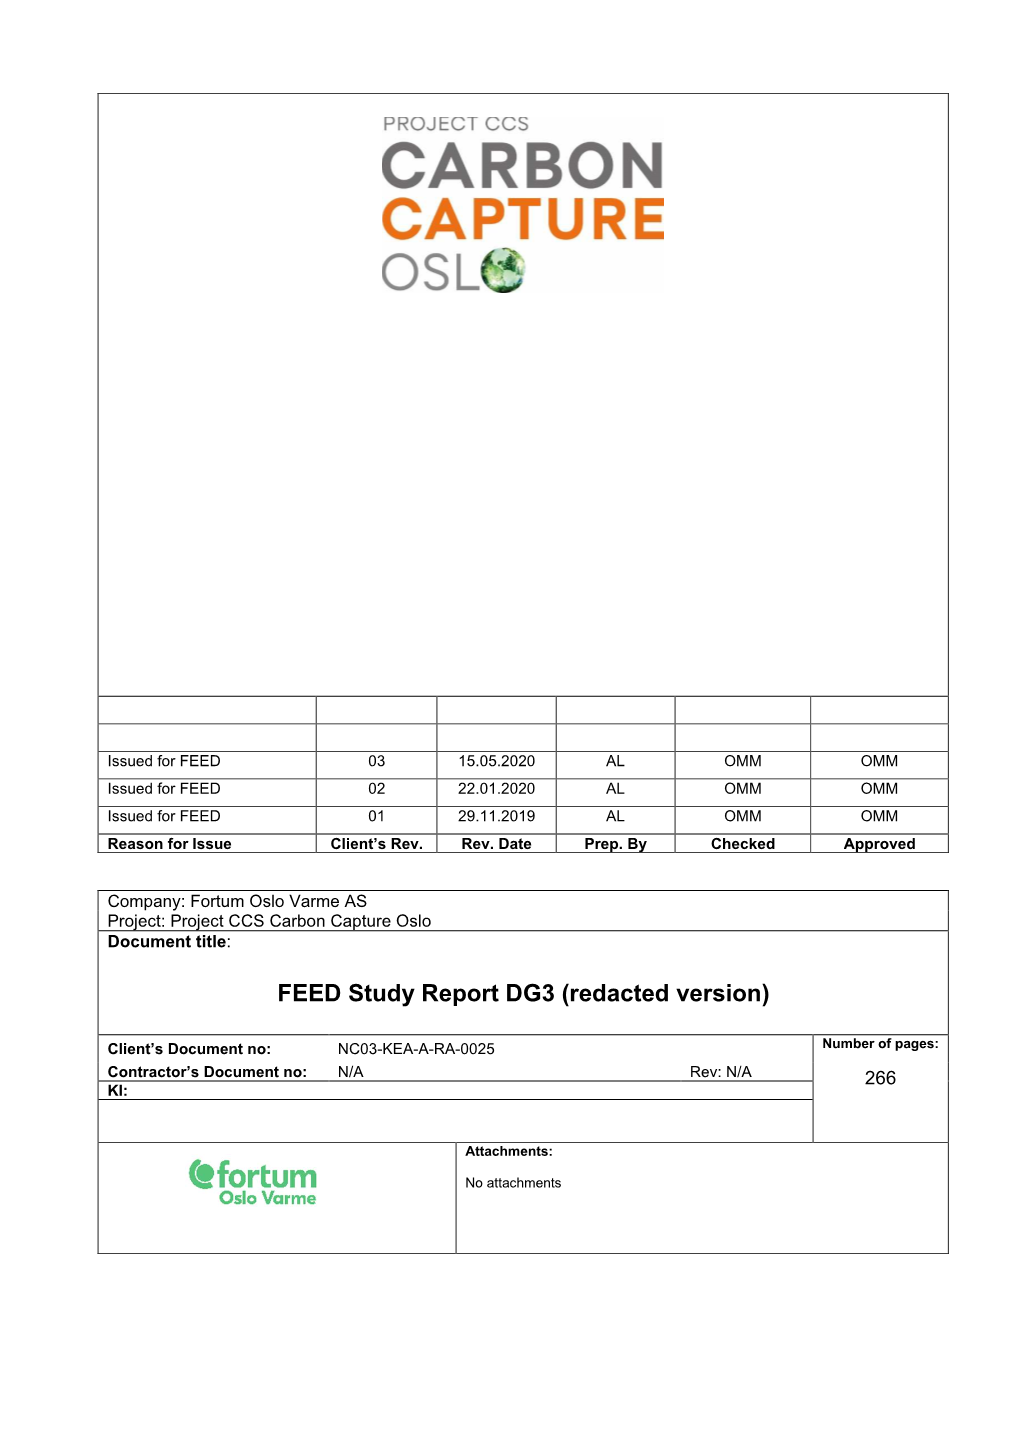 FEED Study Report DG3 (Redacted Version)